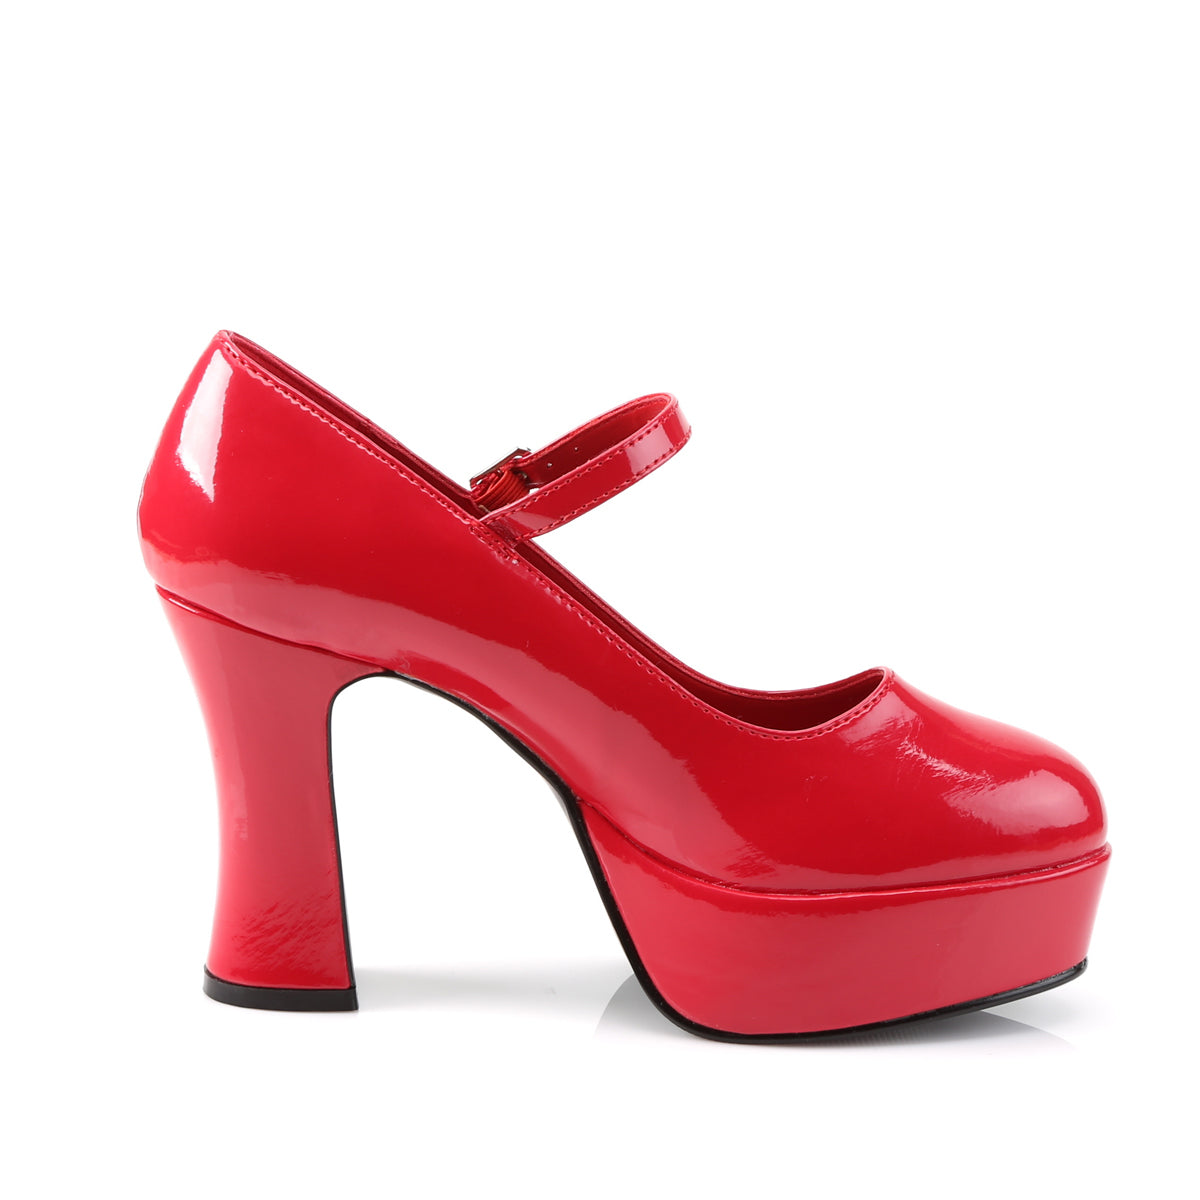 MARYJANE-50 Funtasma Fantasy Red Patent Women's Shoes [Fancy Dress Costume Shoes]